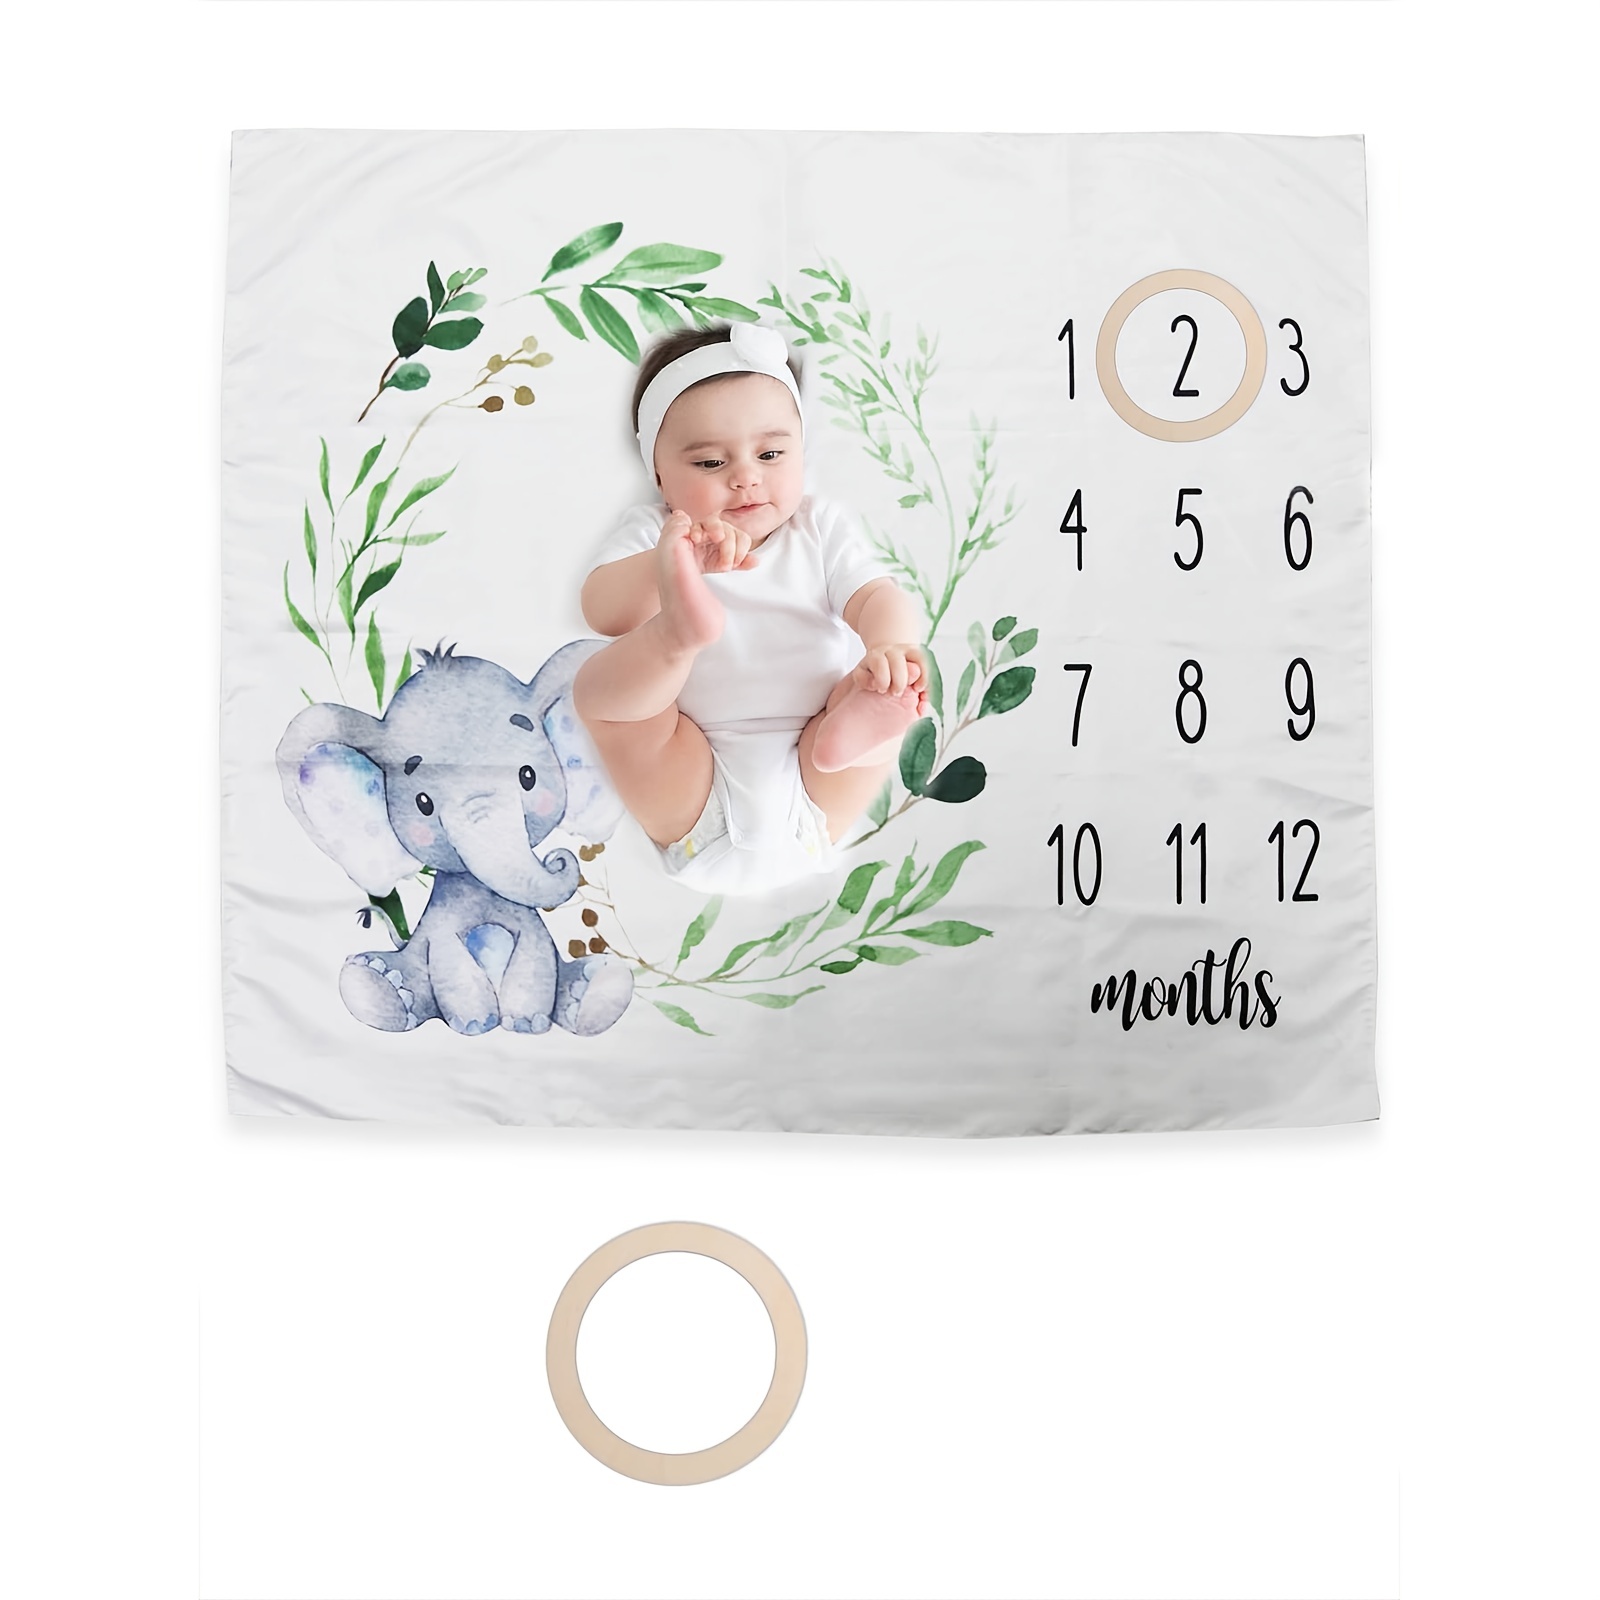 Baby Milestone Blanket: Creative Month Blanket for Newborn Photos